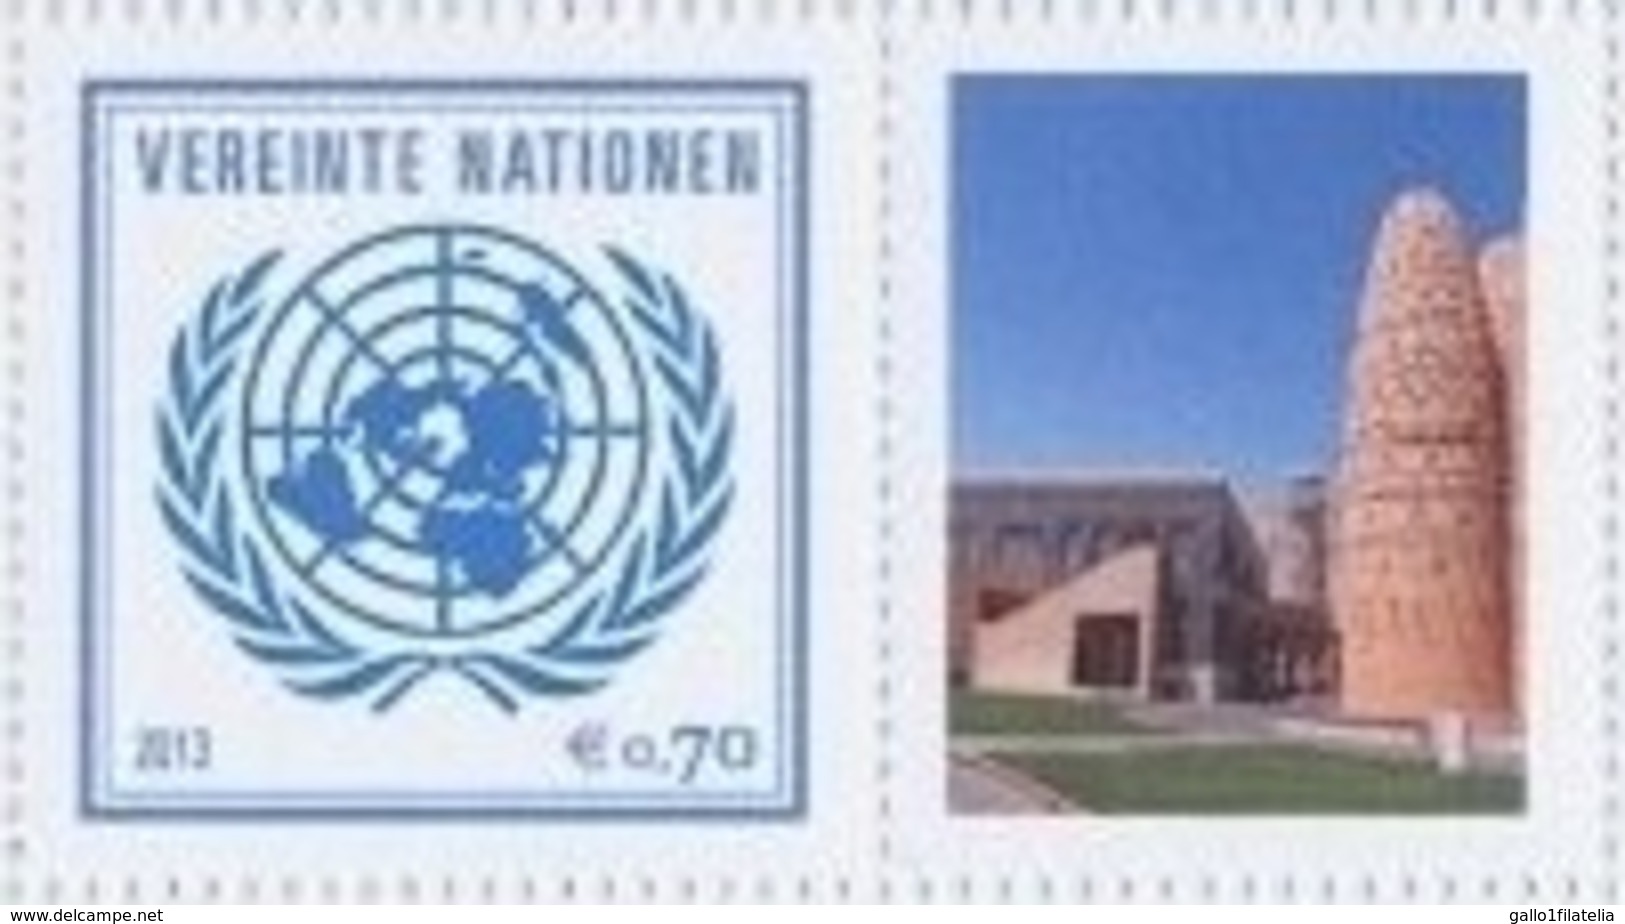 2013 - O.N.U. / UNITED NATIONS - VIENNA / WIEN - FRANCOBOLLI DA FOGLIO DI FRANCOBOLLI PERSONALIZZATI - DOHA 2015. MNH - Unused Stamps